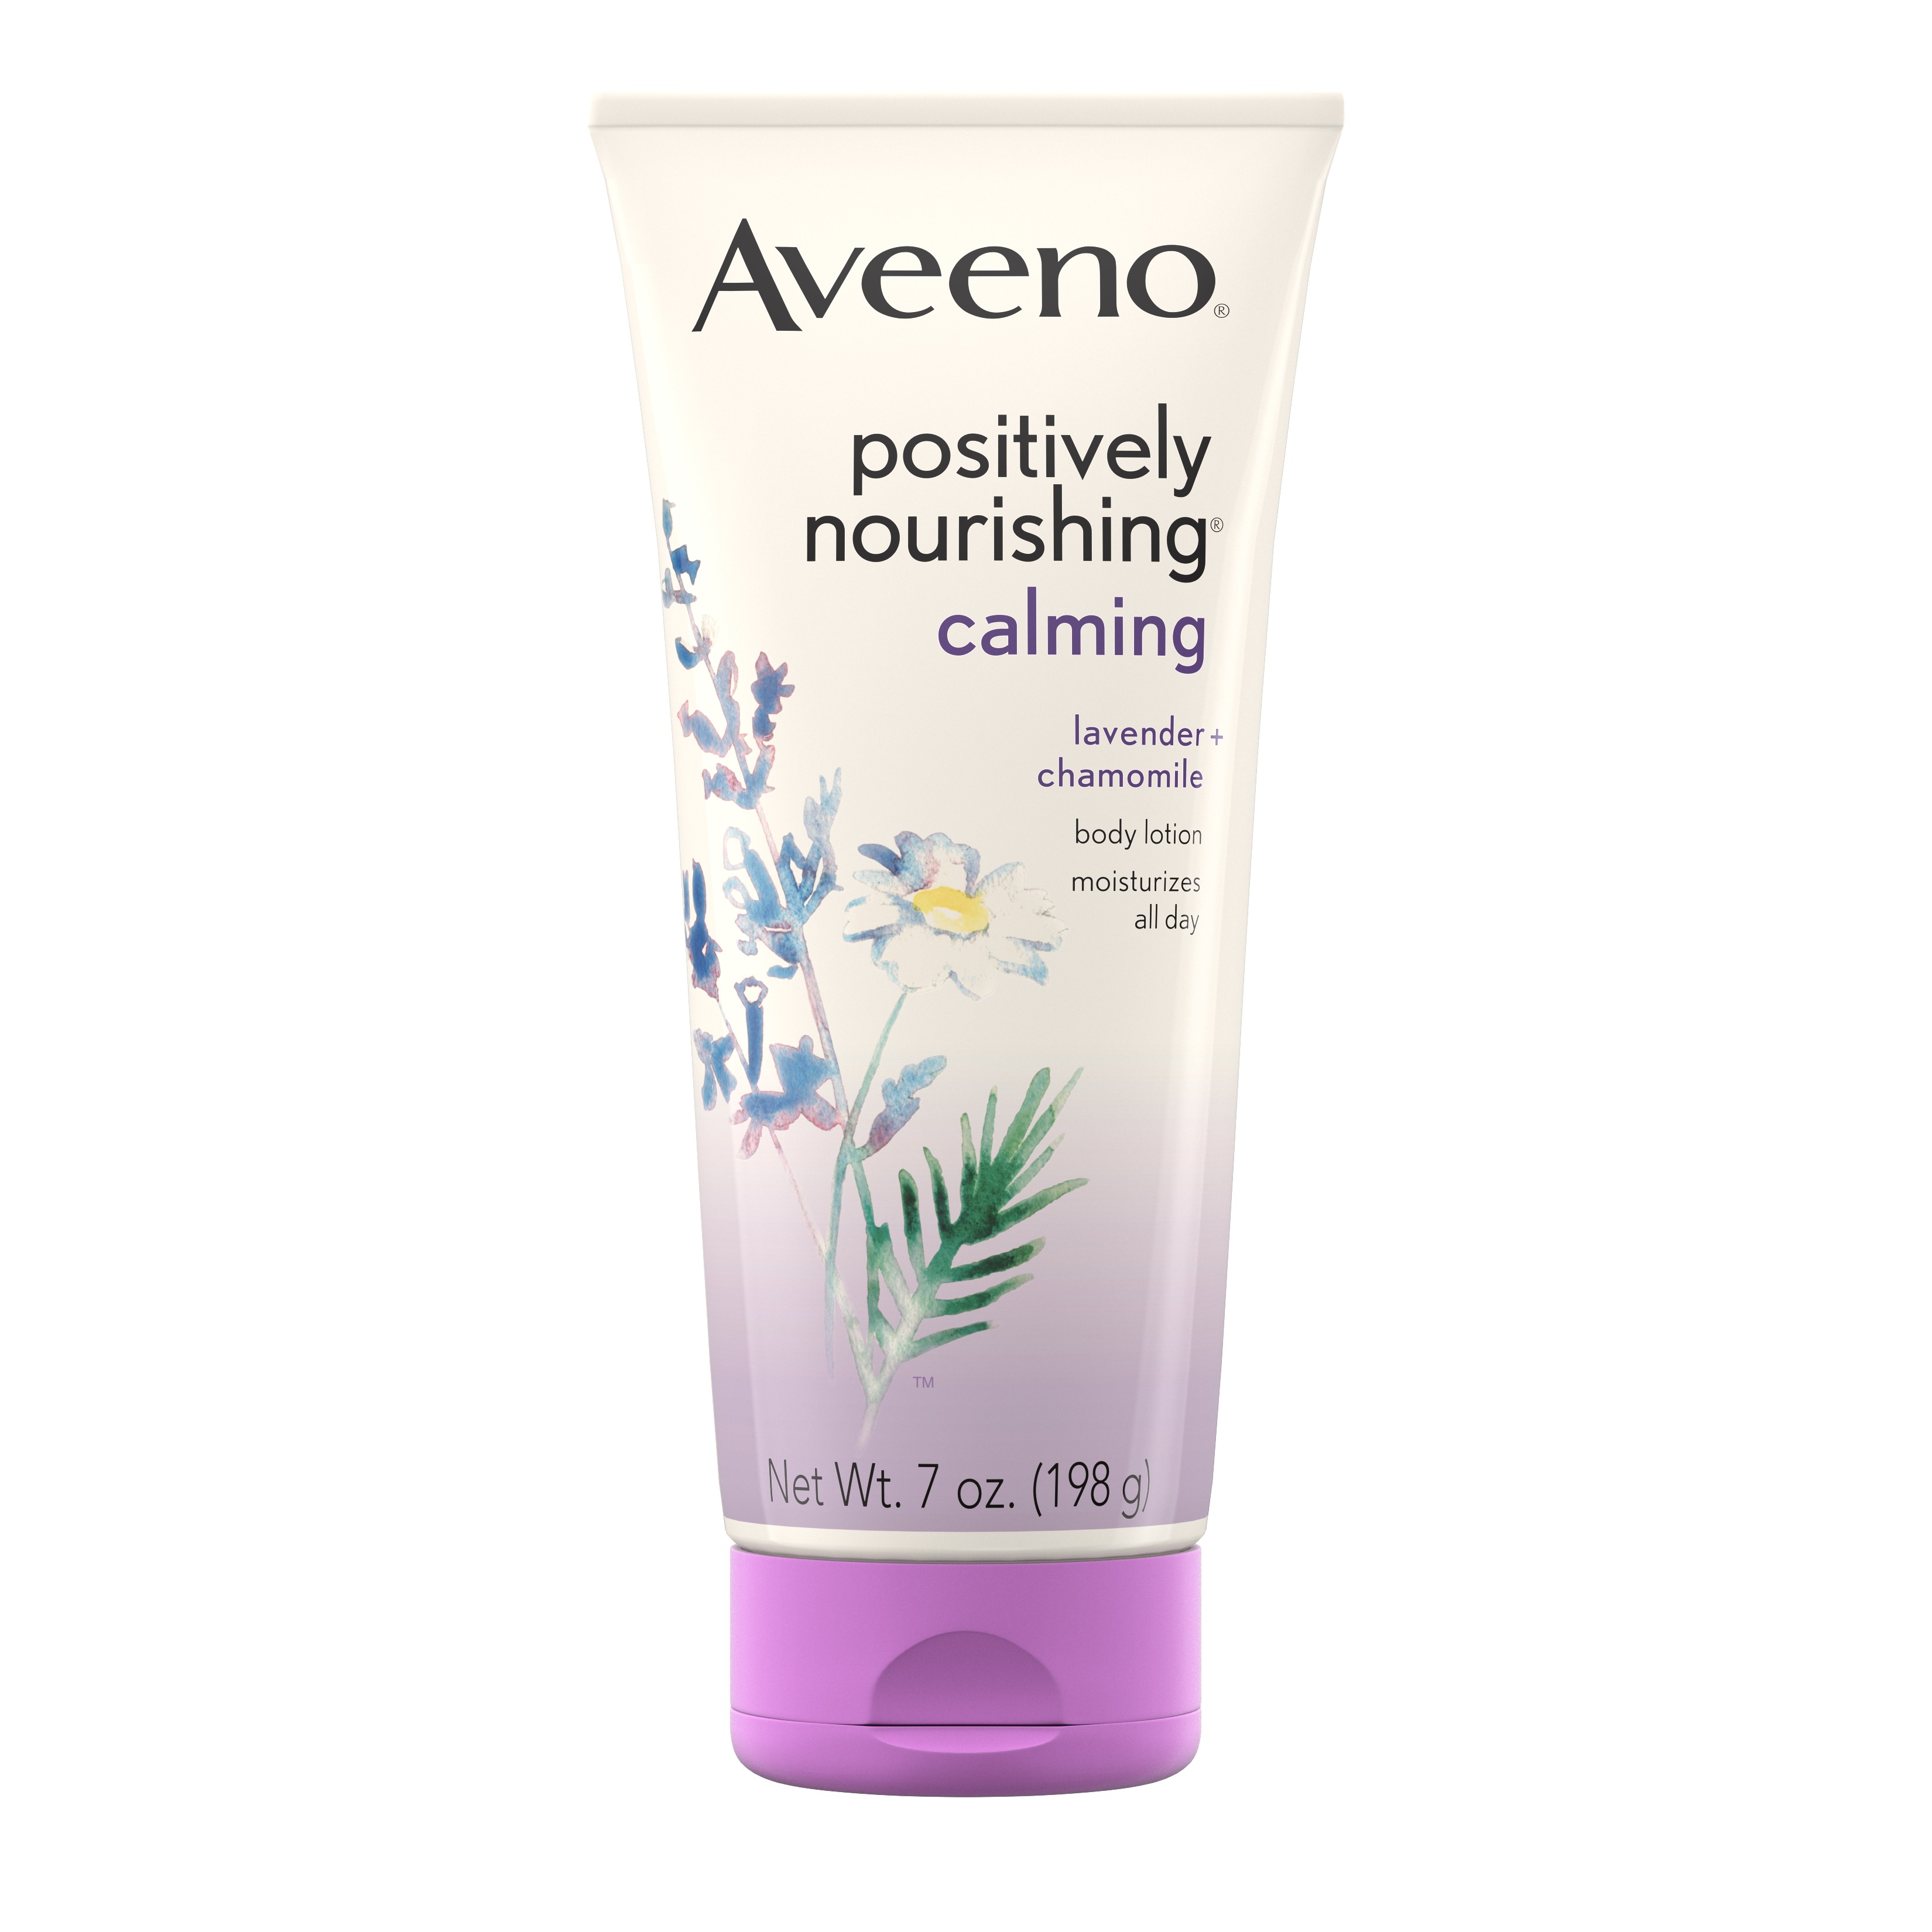 Aveeno Positively Nourishing Calming Lavender Body Lotion, 7 oz - image 1 of 8